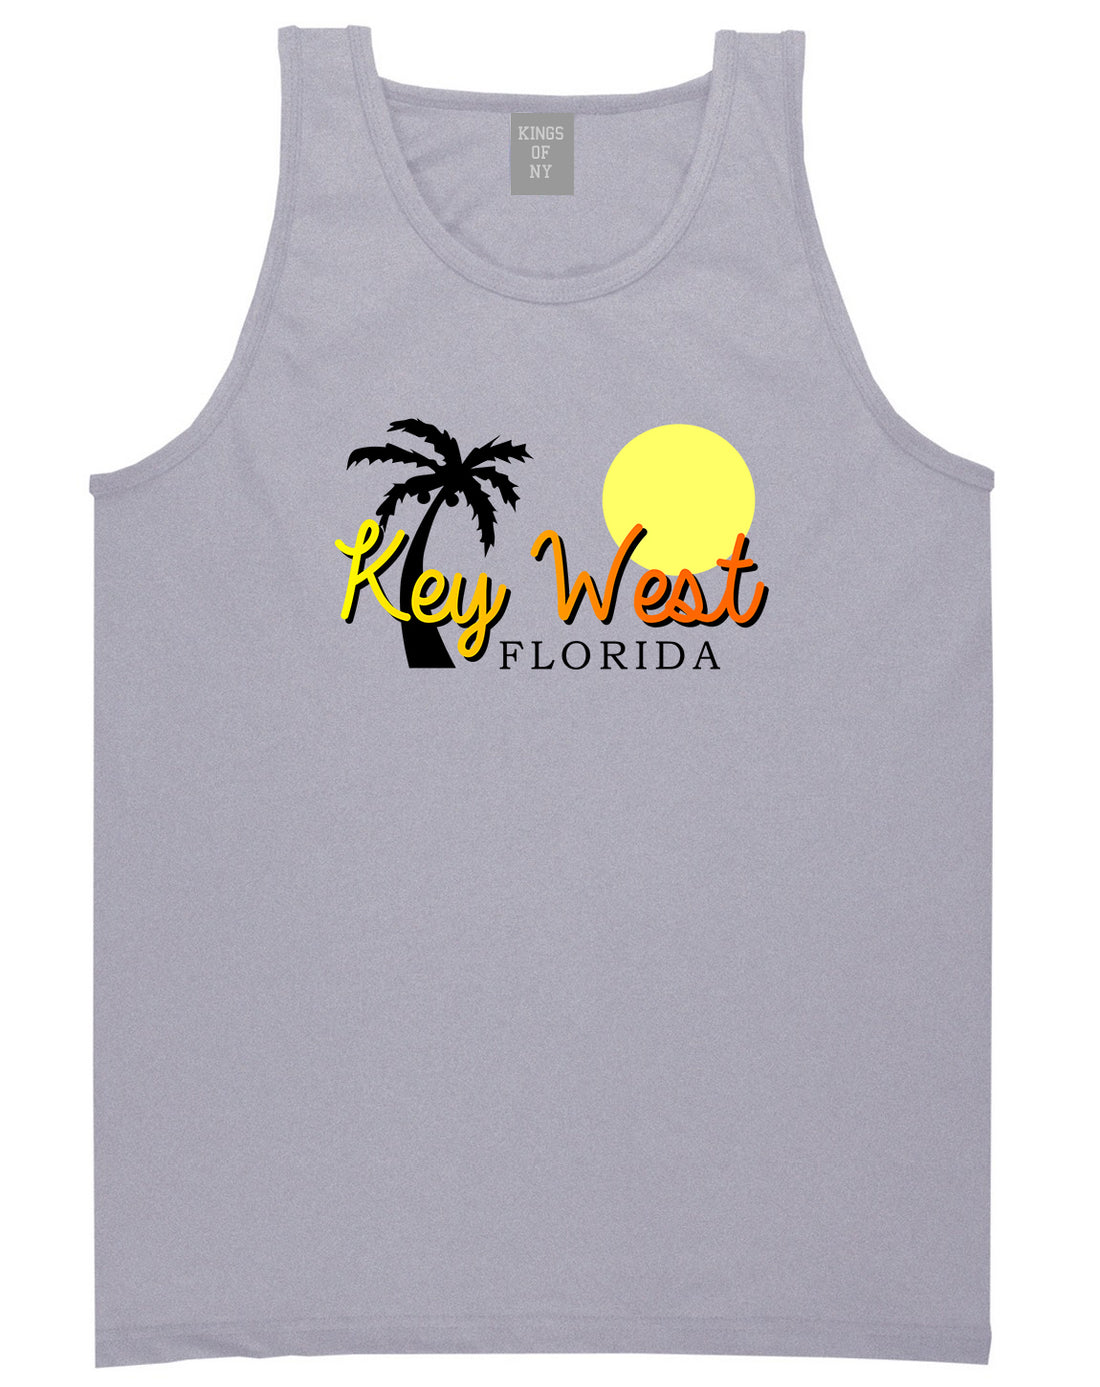 Key West Florida Vacation Mens Tank Top Shirt Grey